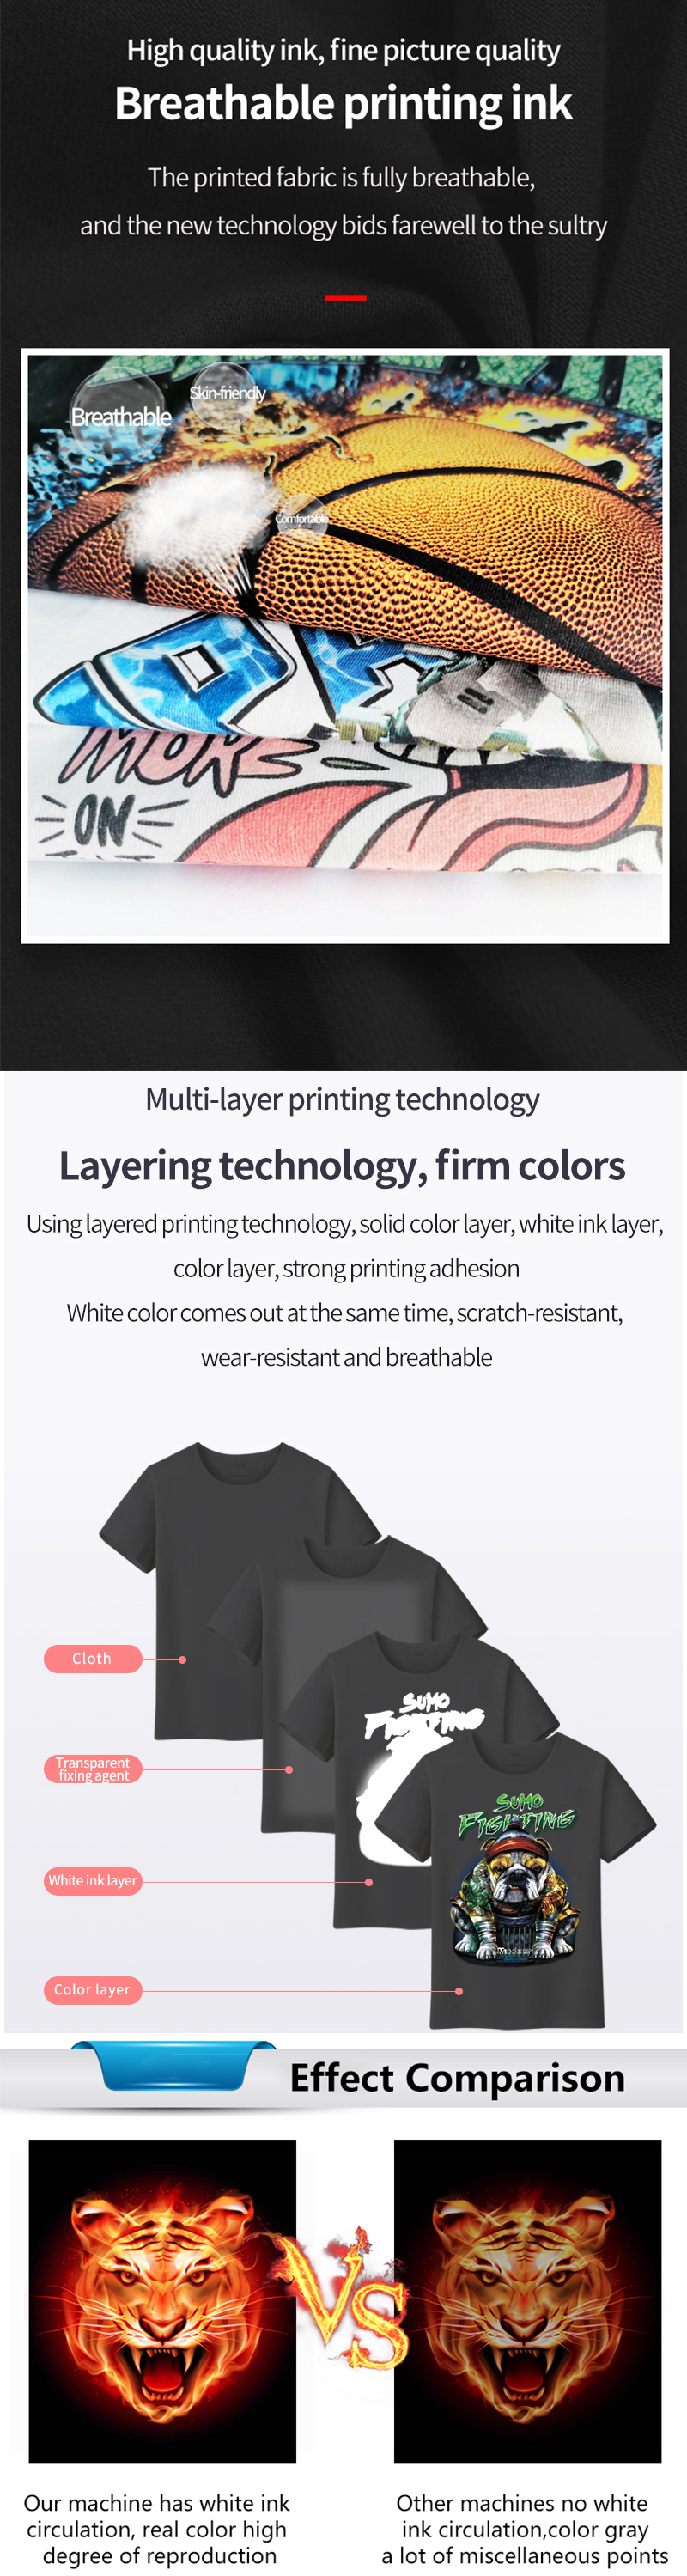 a3 dtg direct to garment t-shirt printer